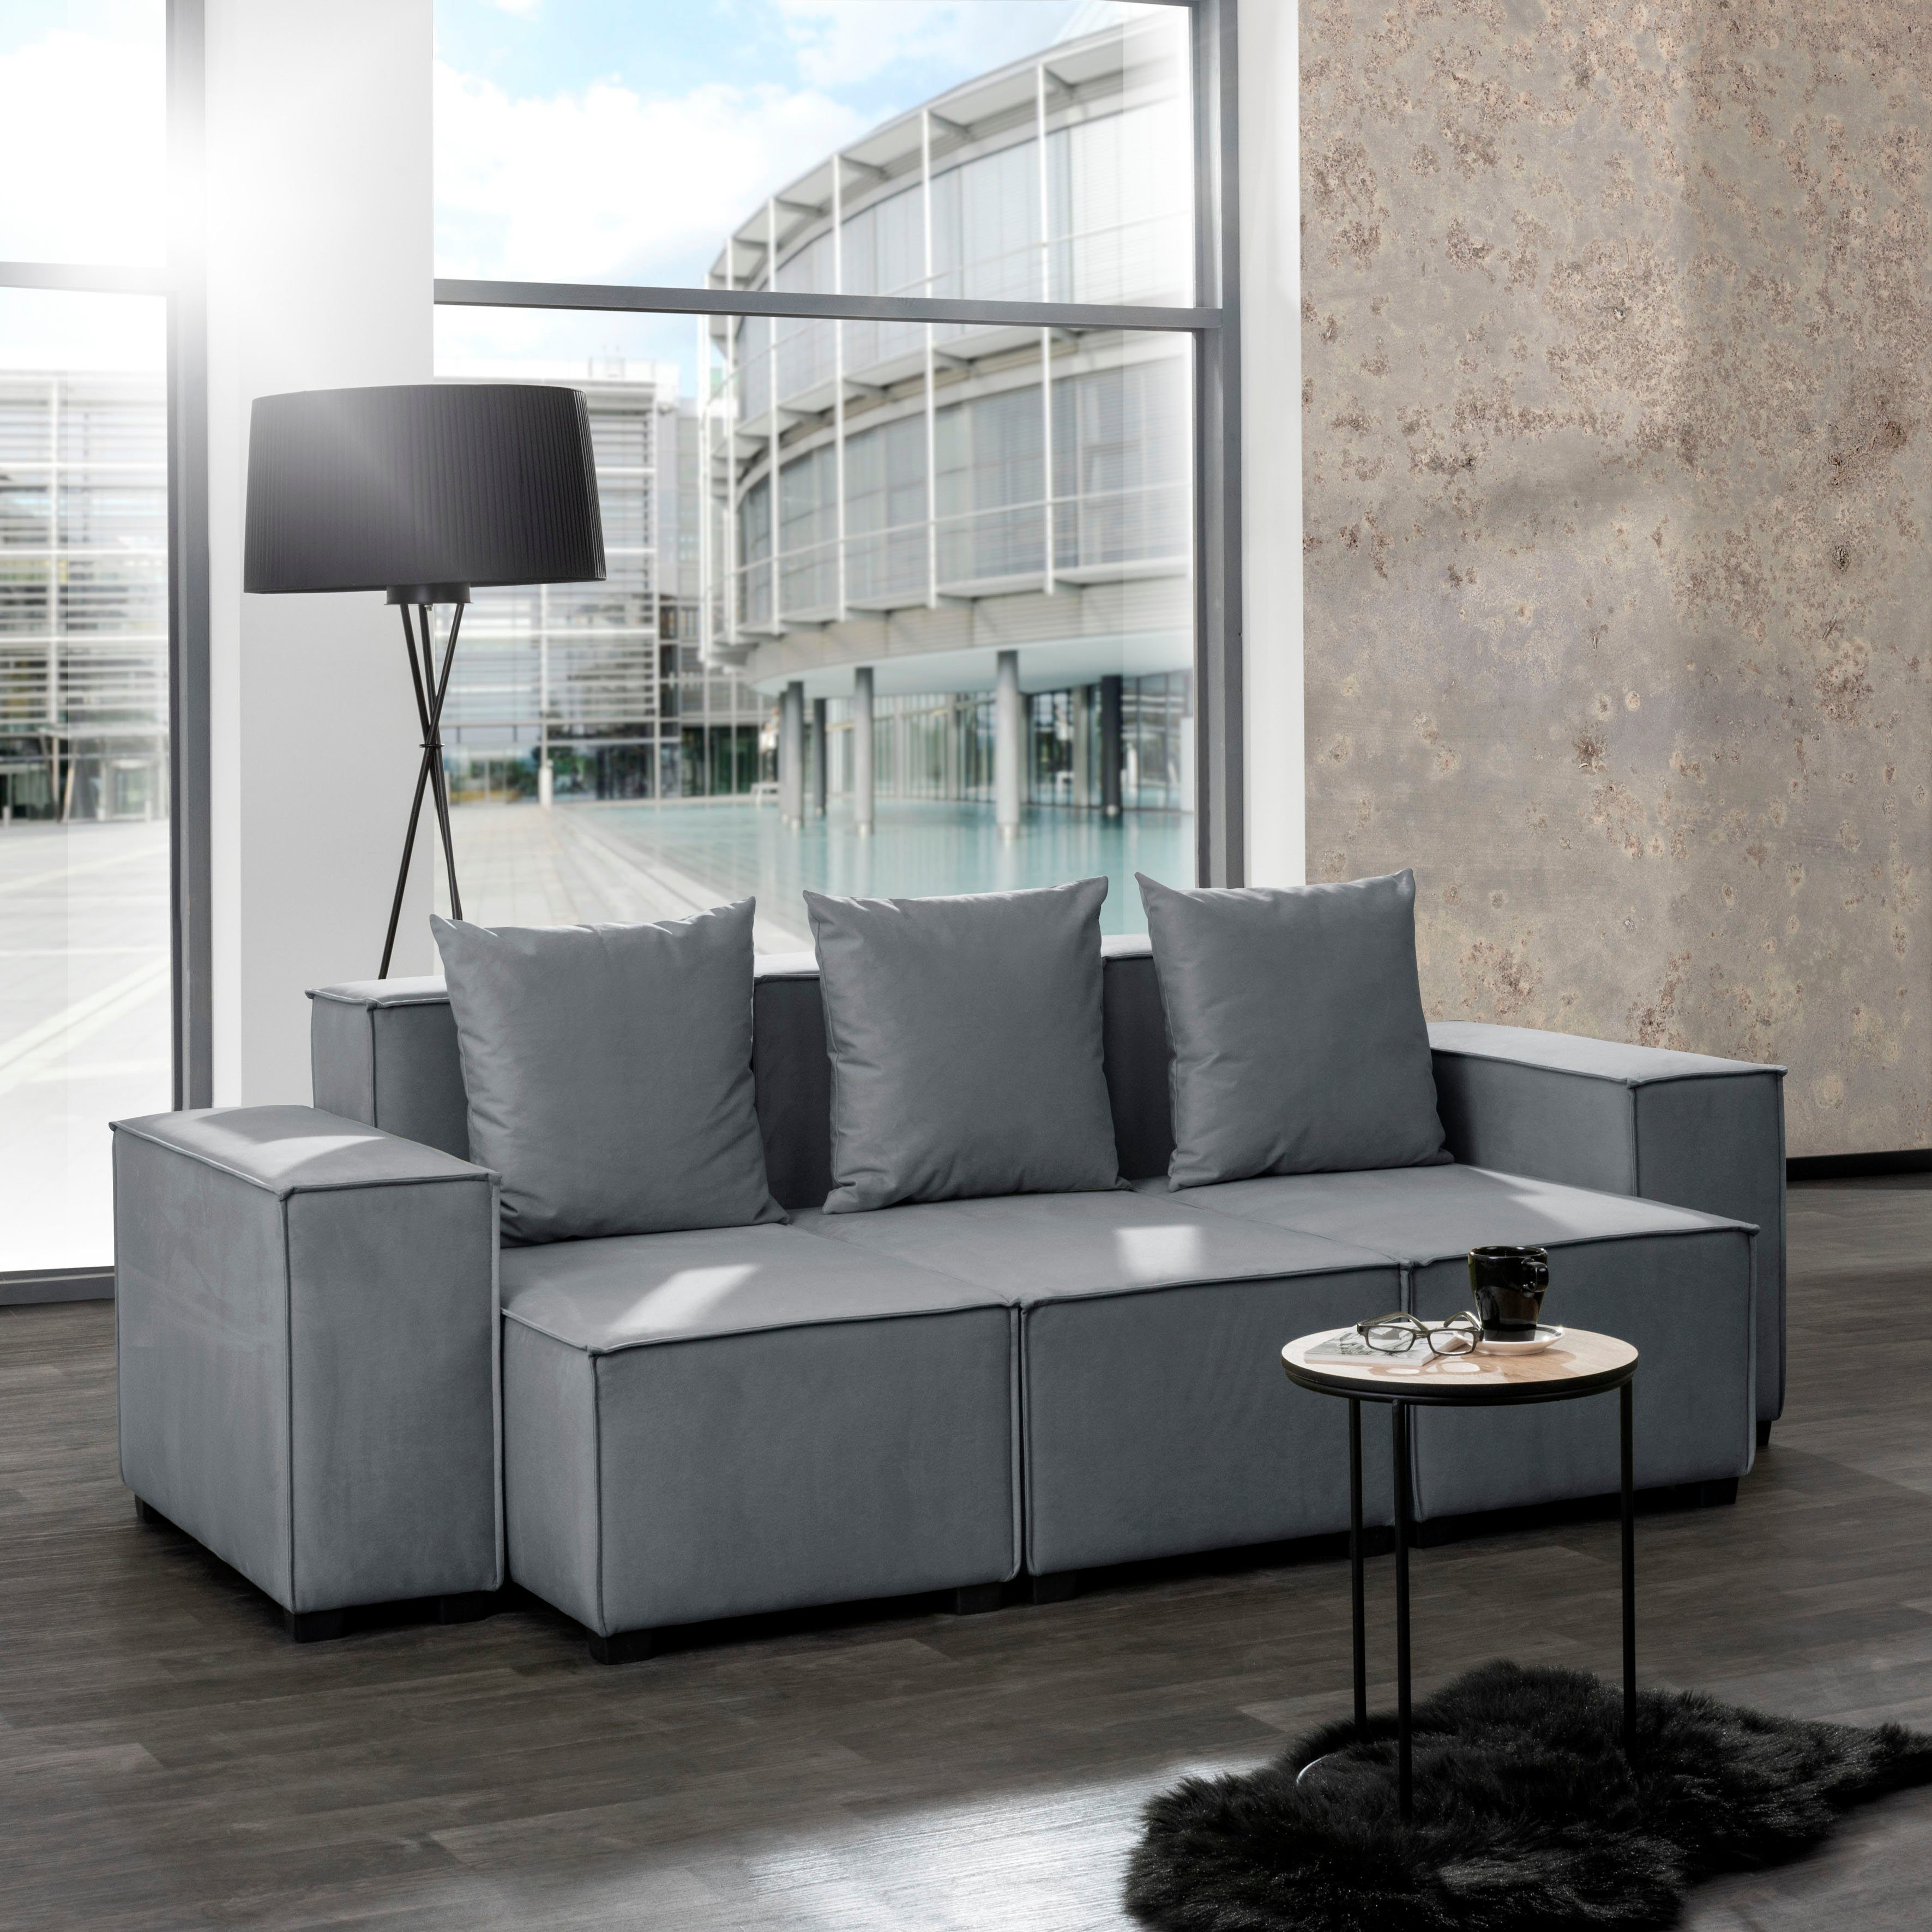 Max Winzer® Wohnlandschaft MOVE, Set, Sofa-Set 02 aus 8 Sitz-Elementen, inklusive 3 Zierkissen, kombinierbar